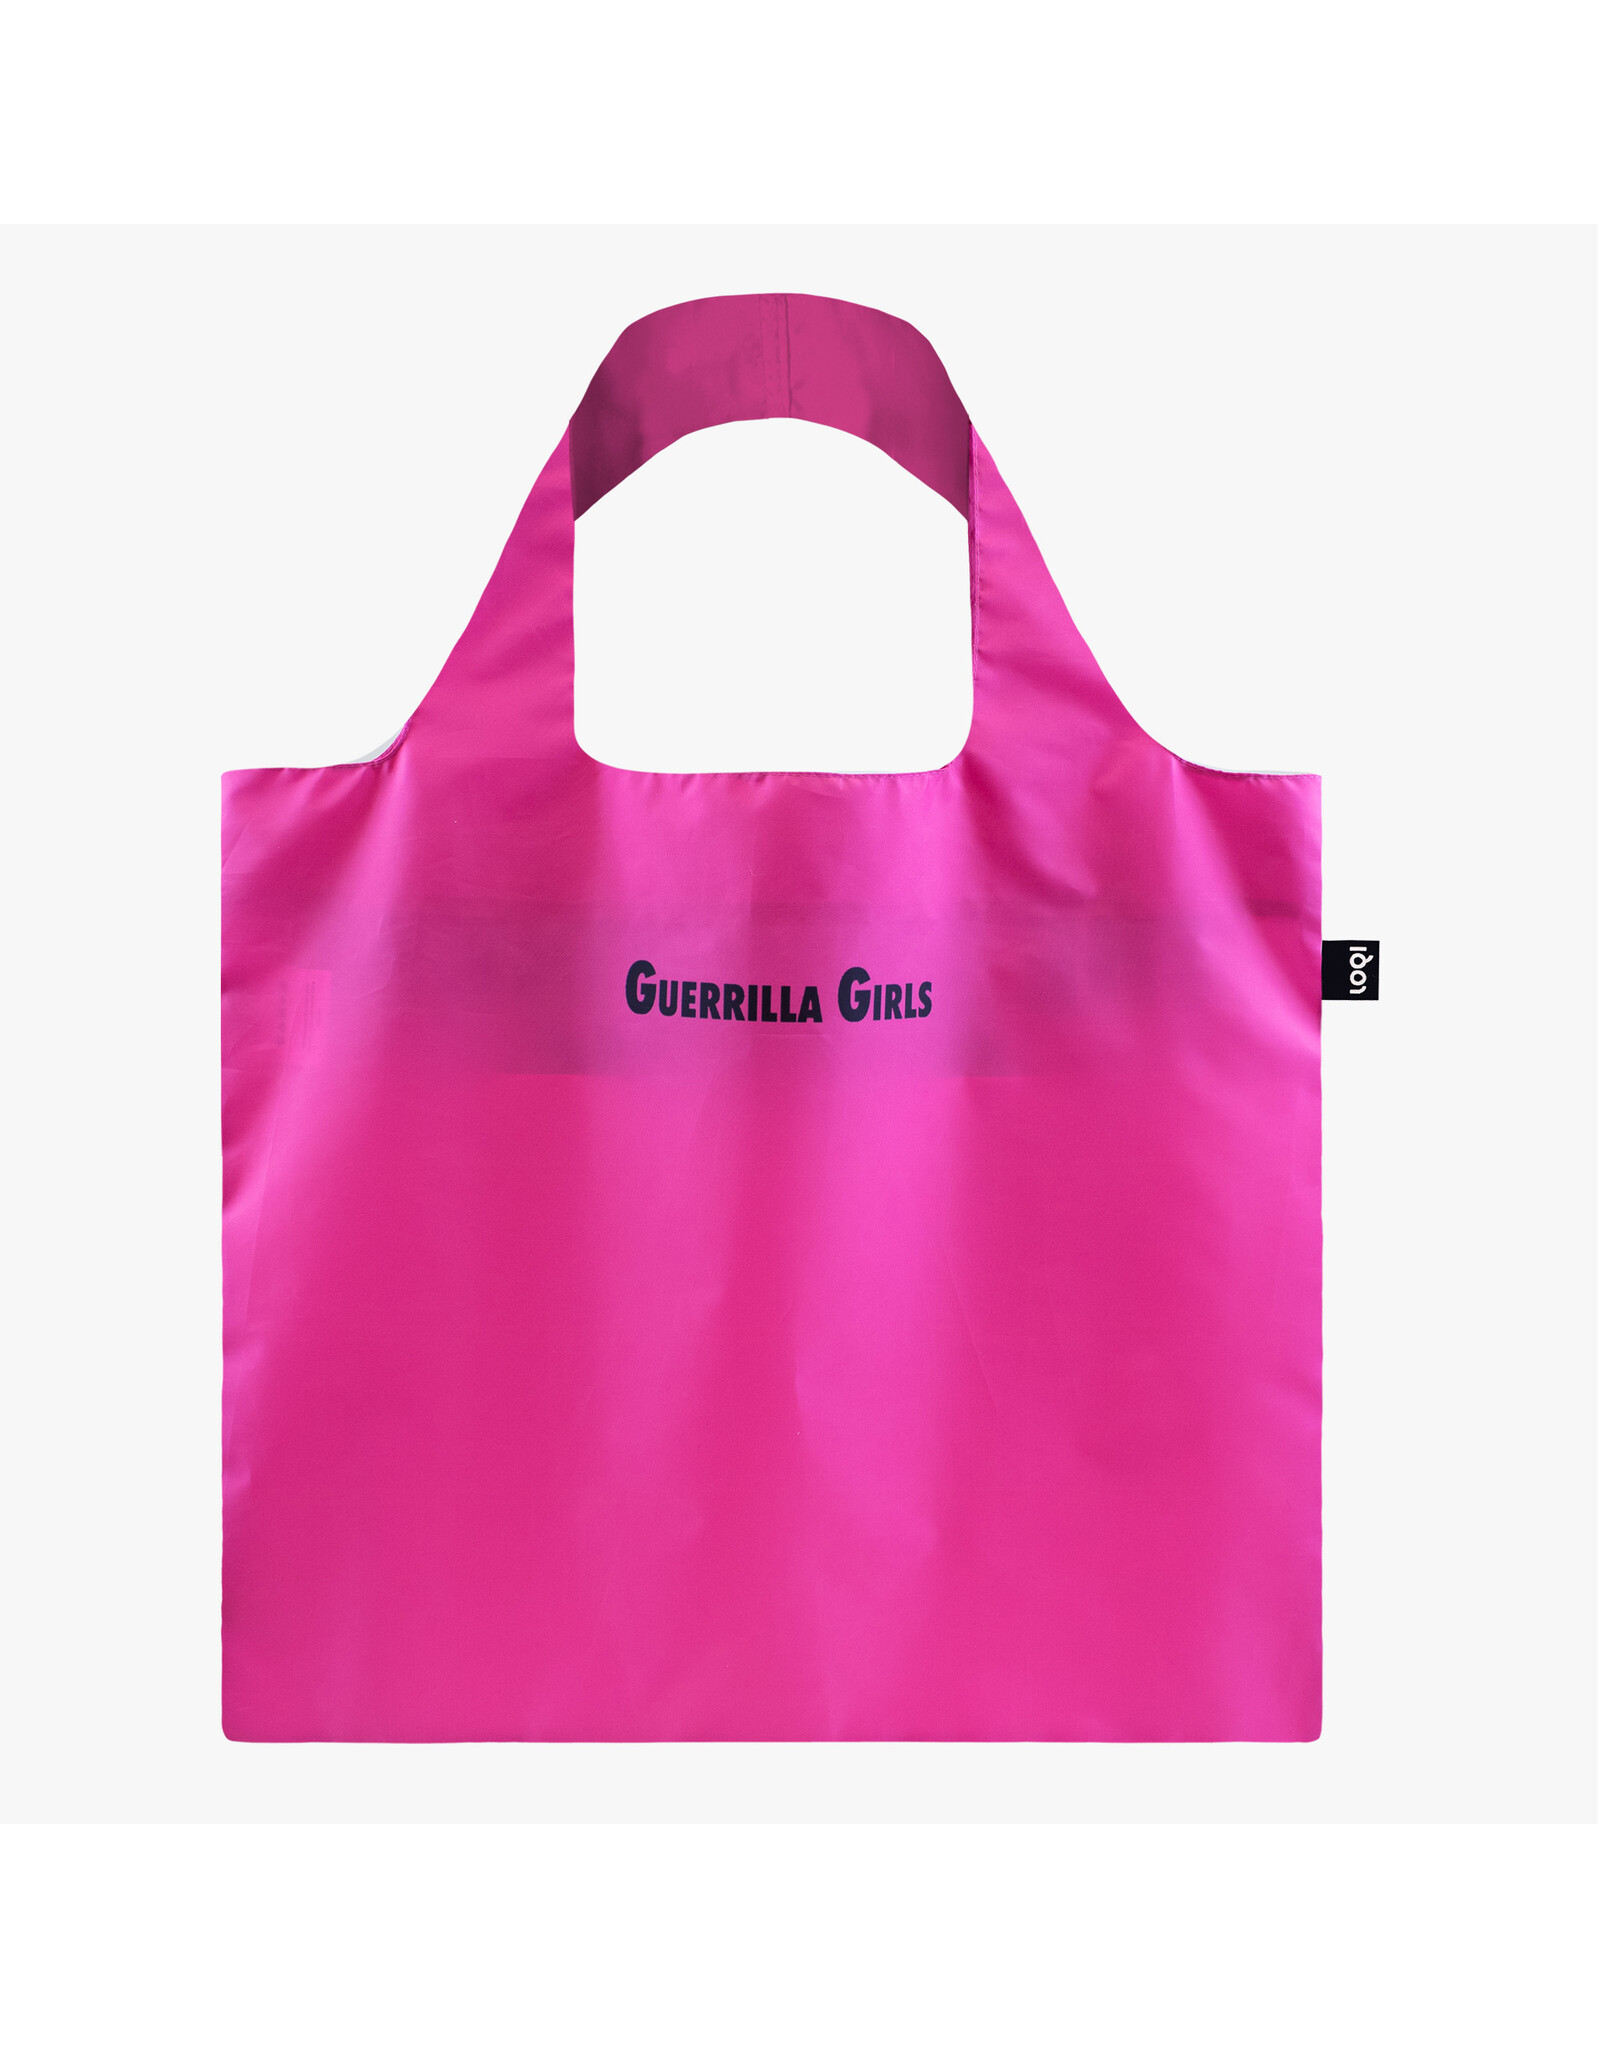 Guerrilla Girls x Being A Woman Artist LOQI Recycled Bag